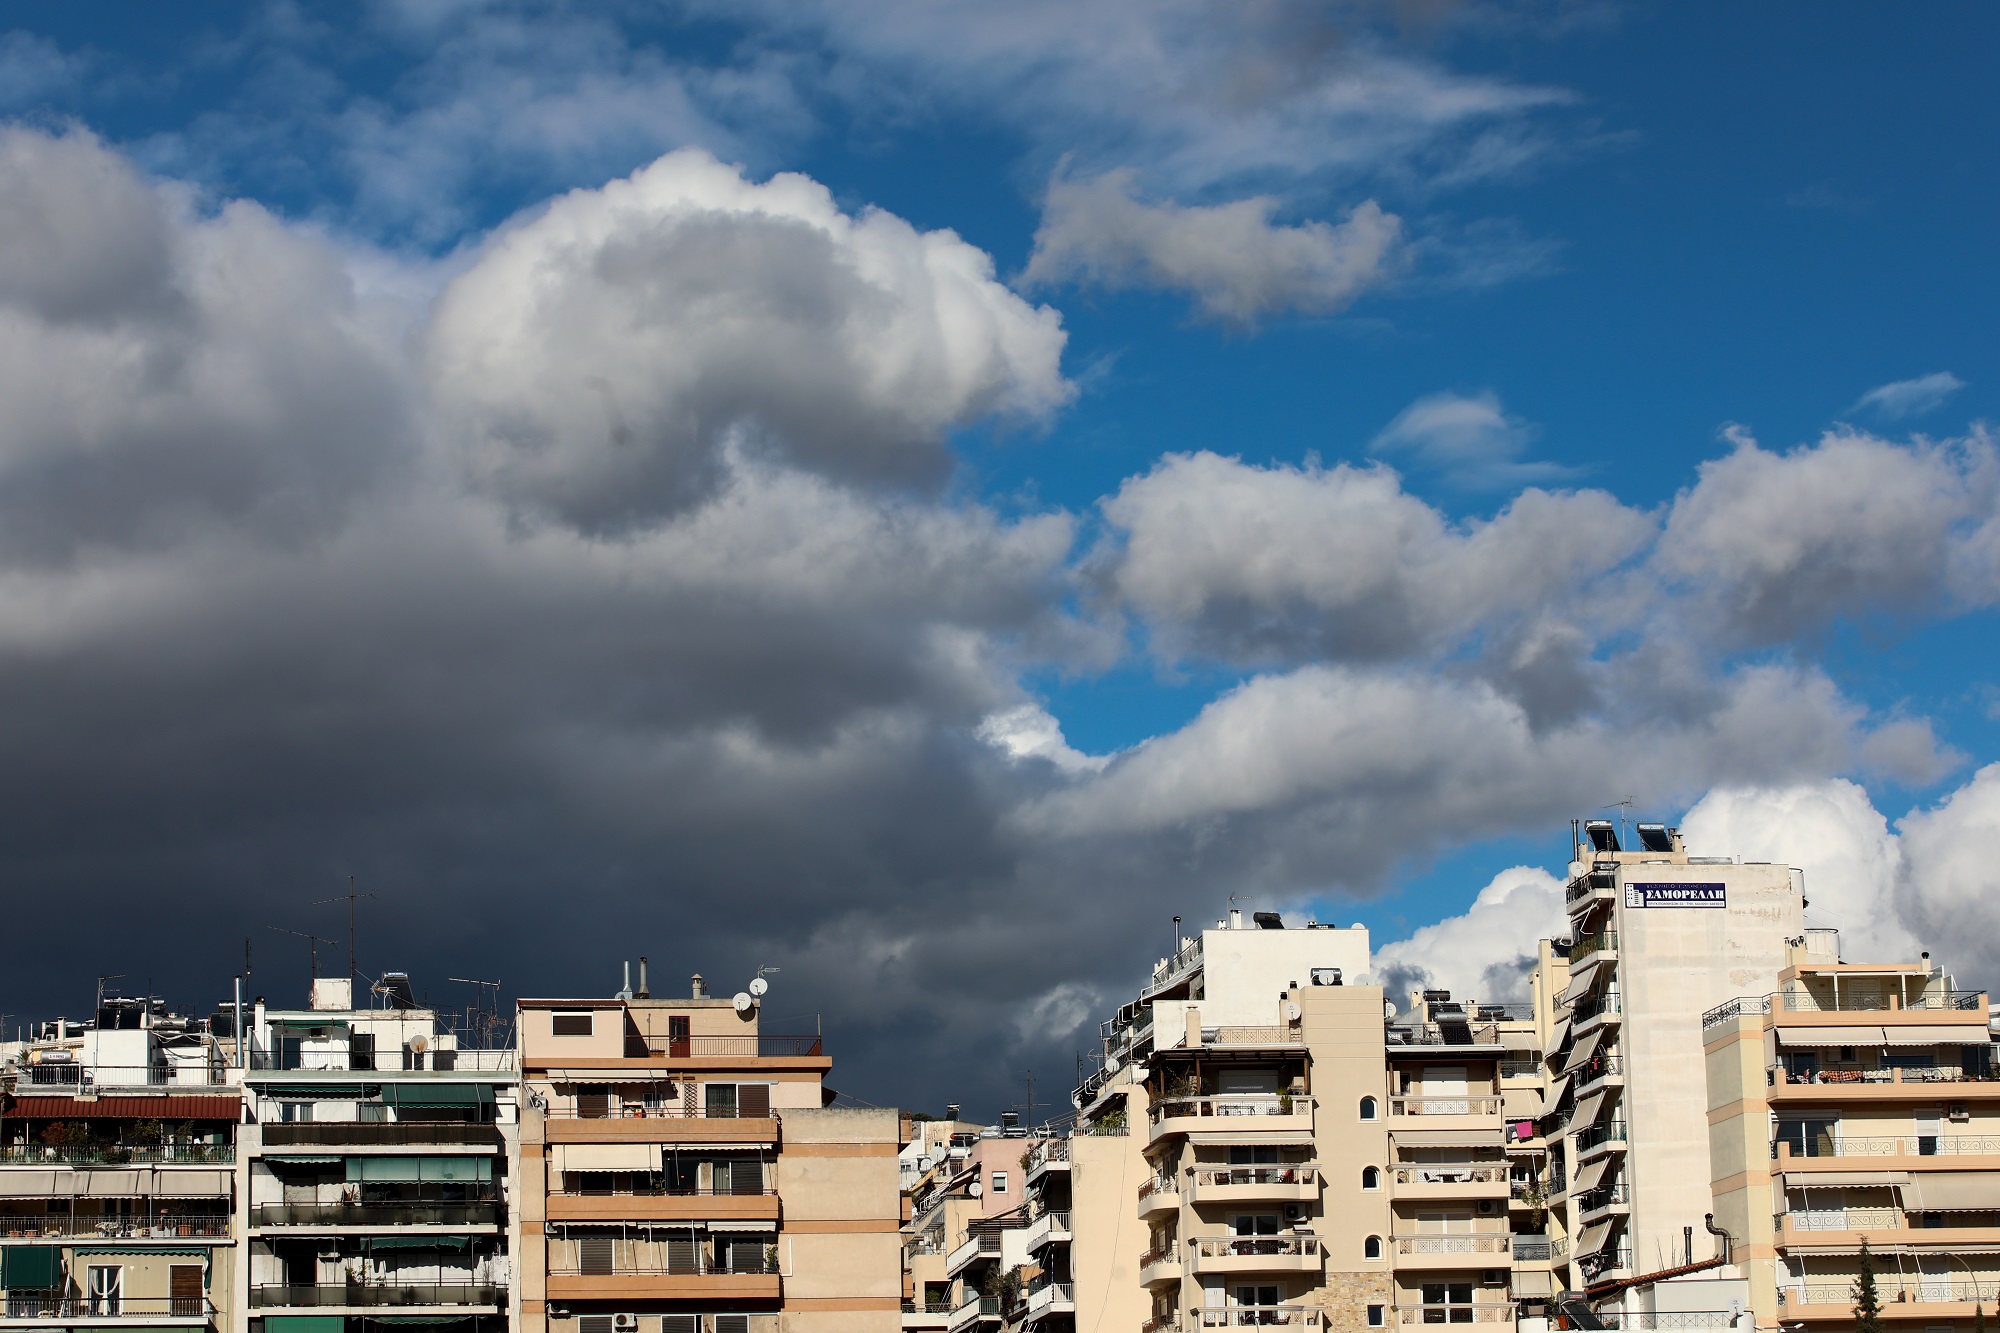 Eκτακτο δελτίο καιρού από την Περιφέρεια Θεσσαλίας: Έρχεται η κακοκαιρία «Μπάρμπαρα»